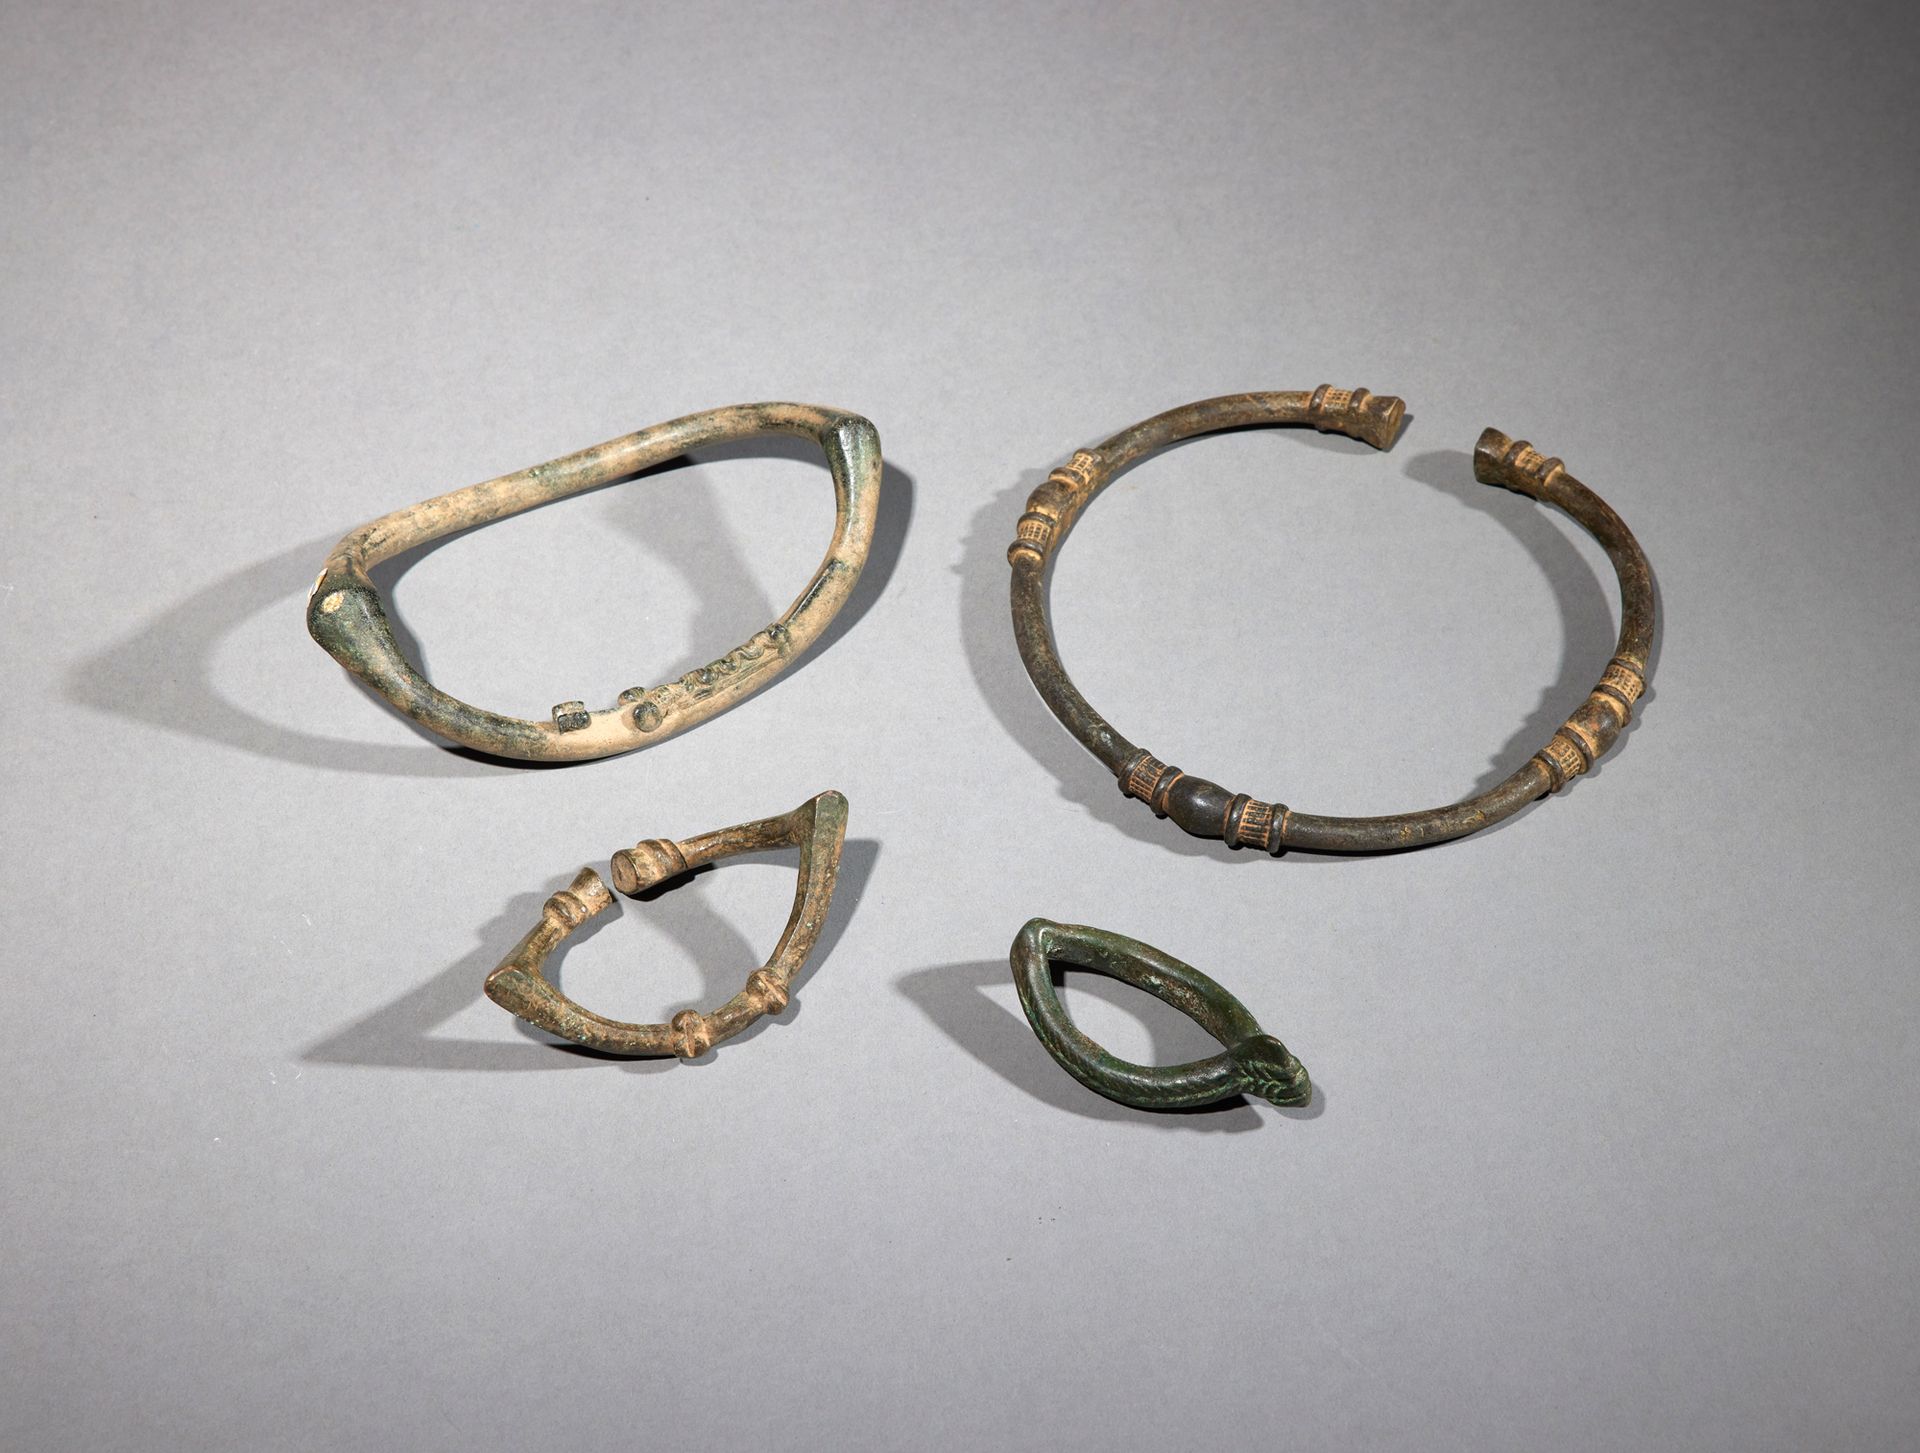 Null 四个甘氏文物

布基纳法索

铜质

长7.5至15.6厘米



一套四件甘铜装饰品，包括三个手镯和一个扭矩。